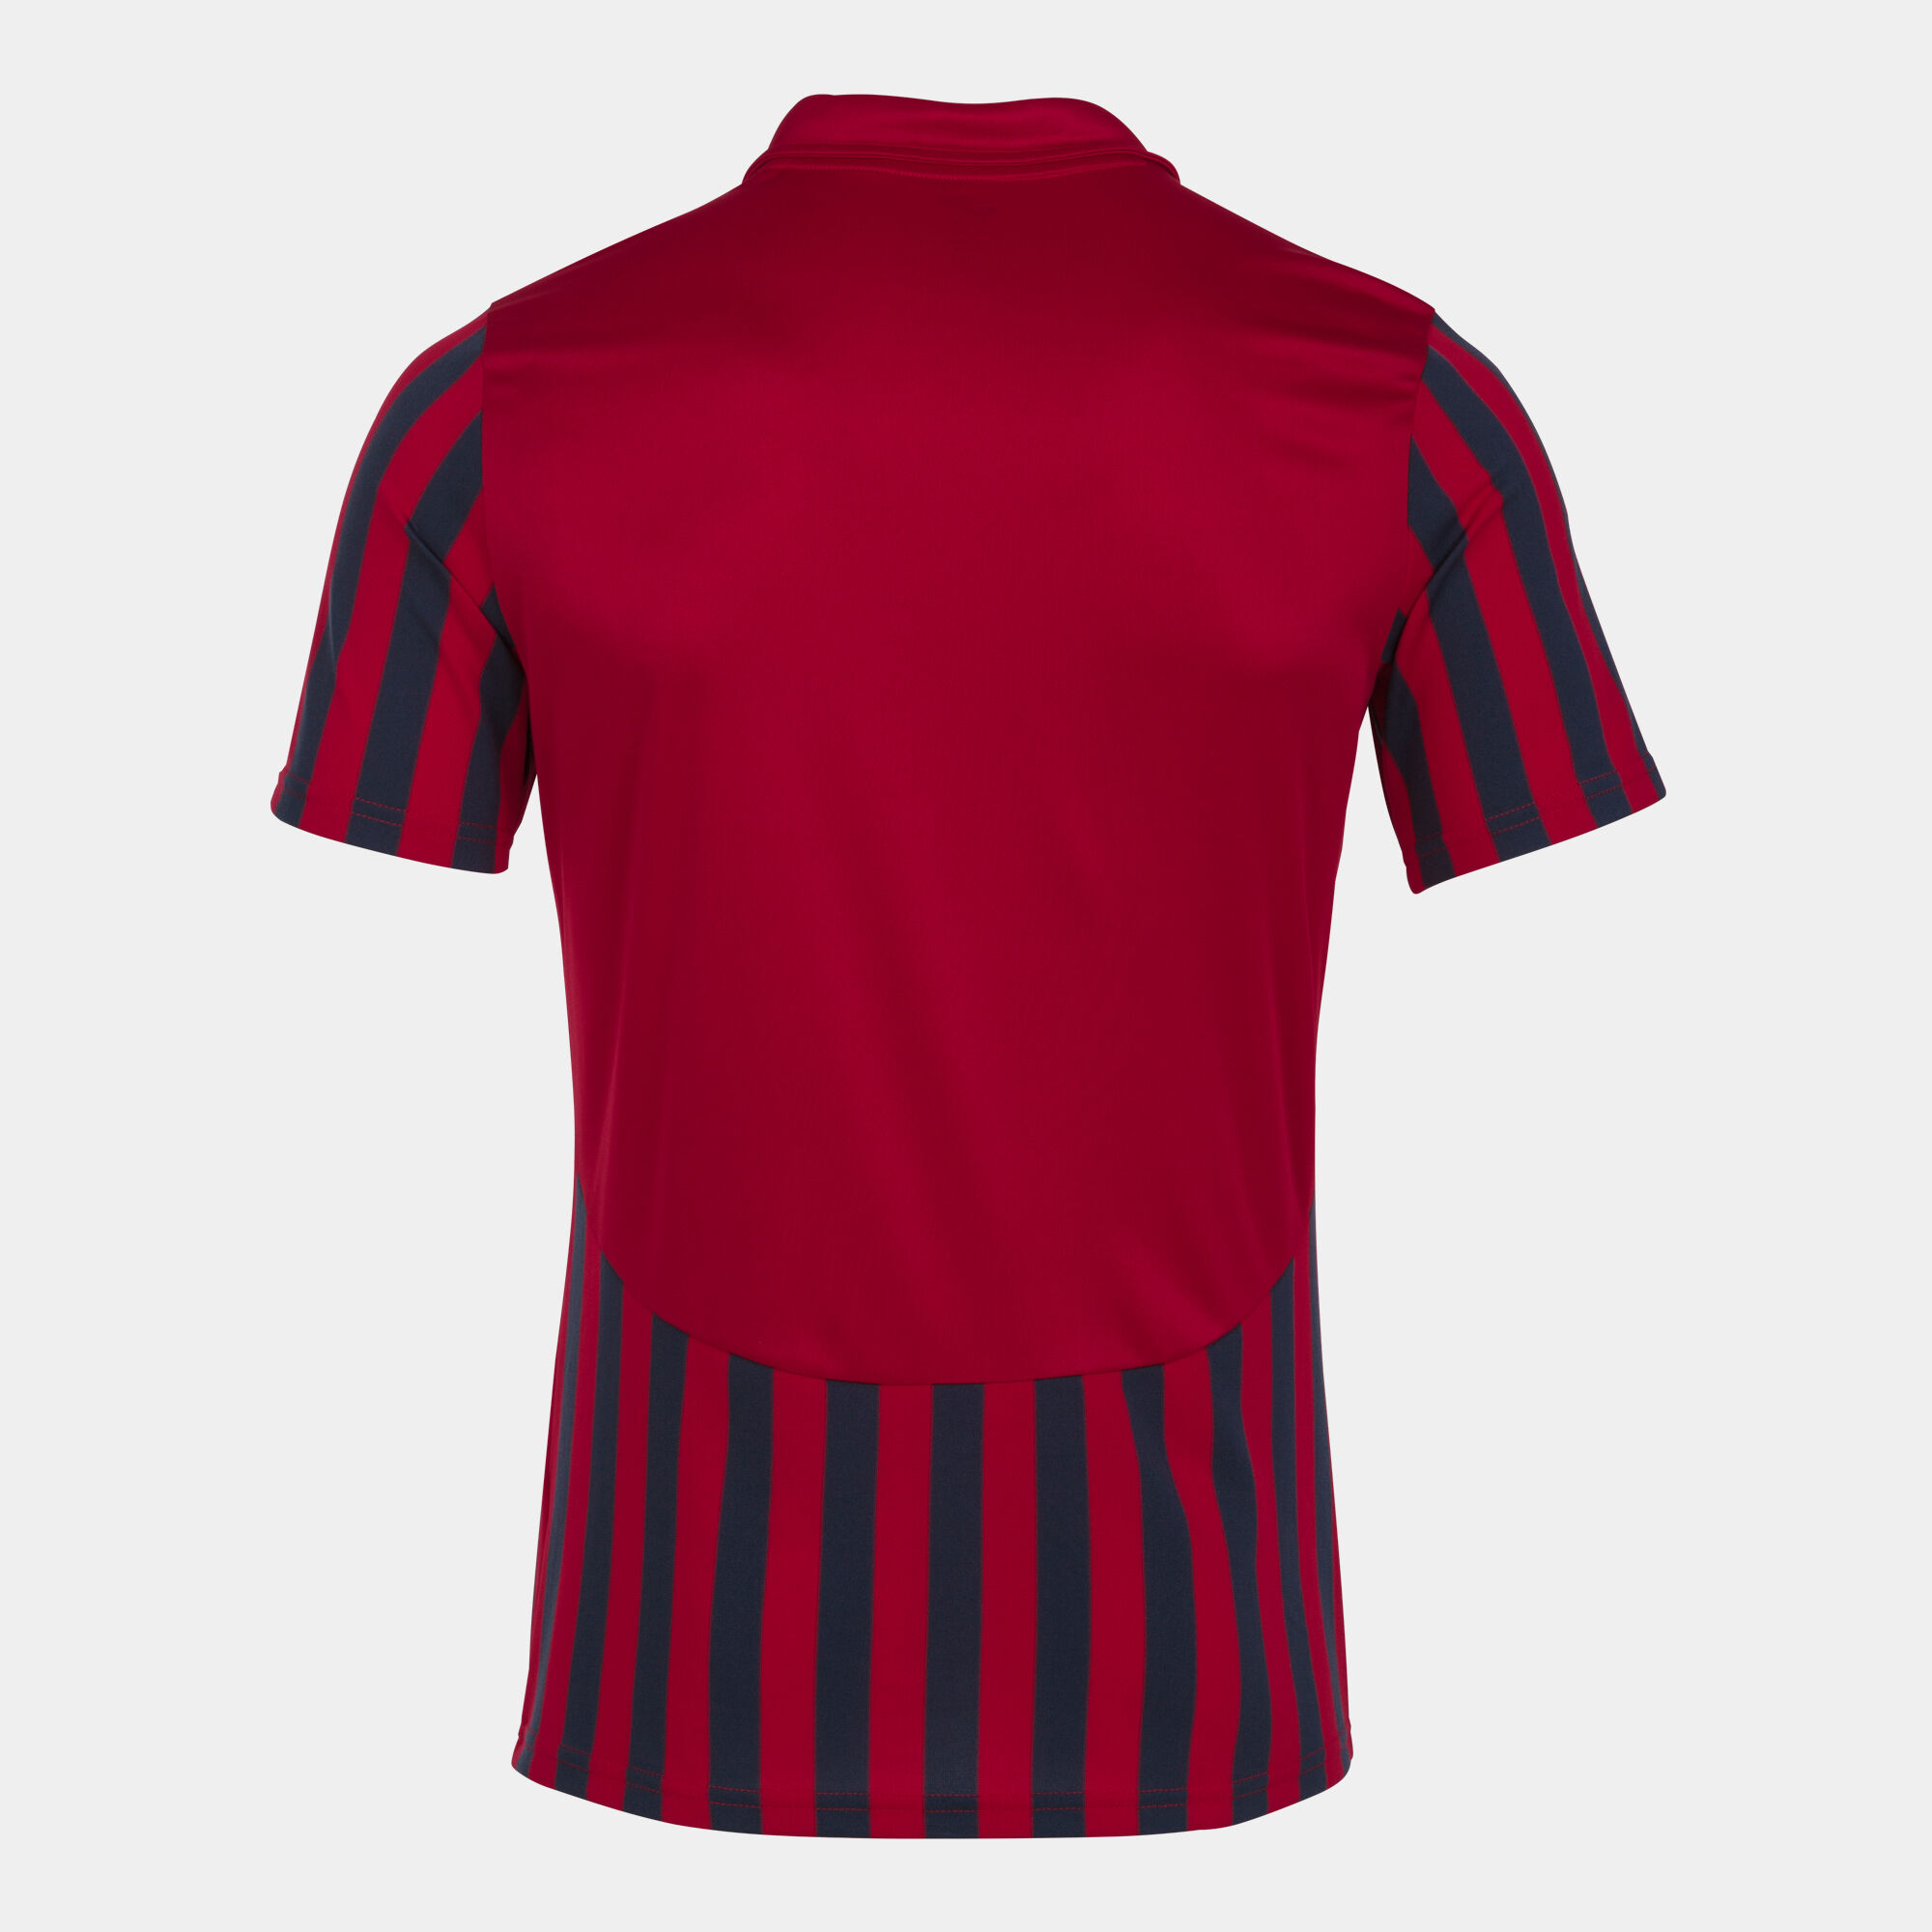 Camiseta manga corta hombre Copa II rojo marino